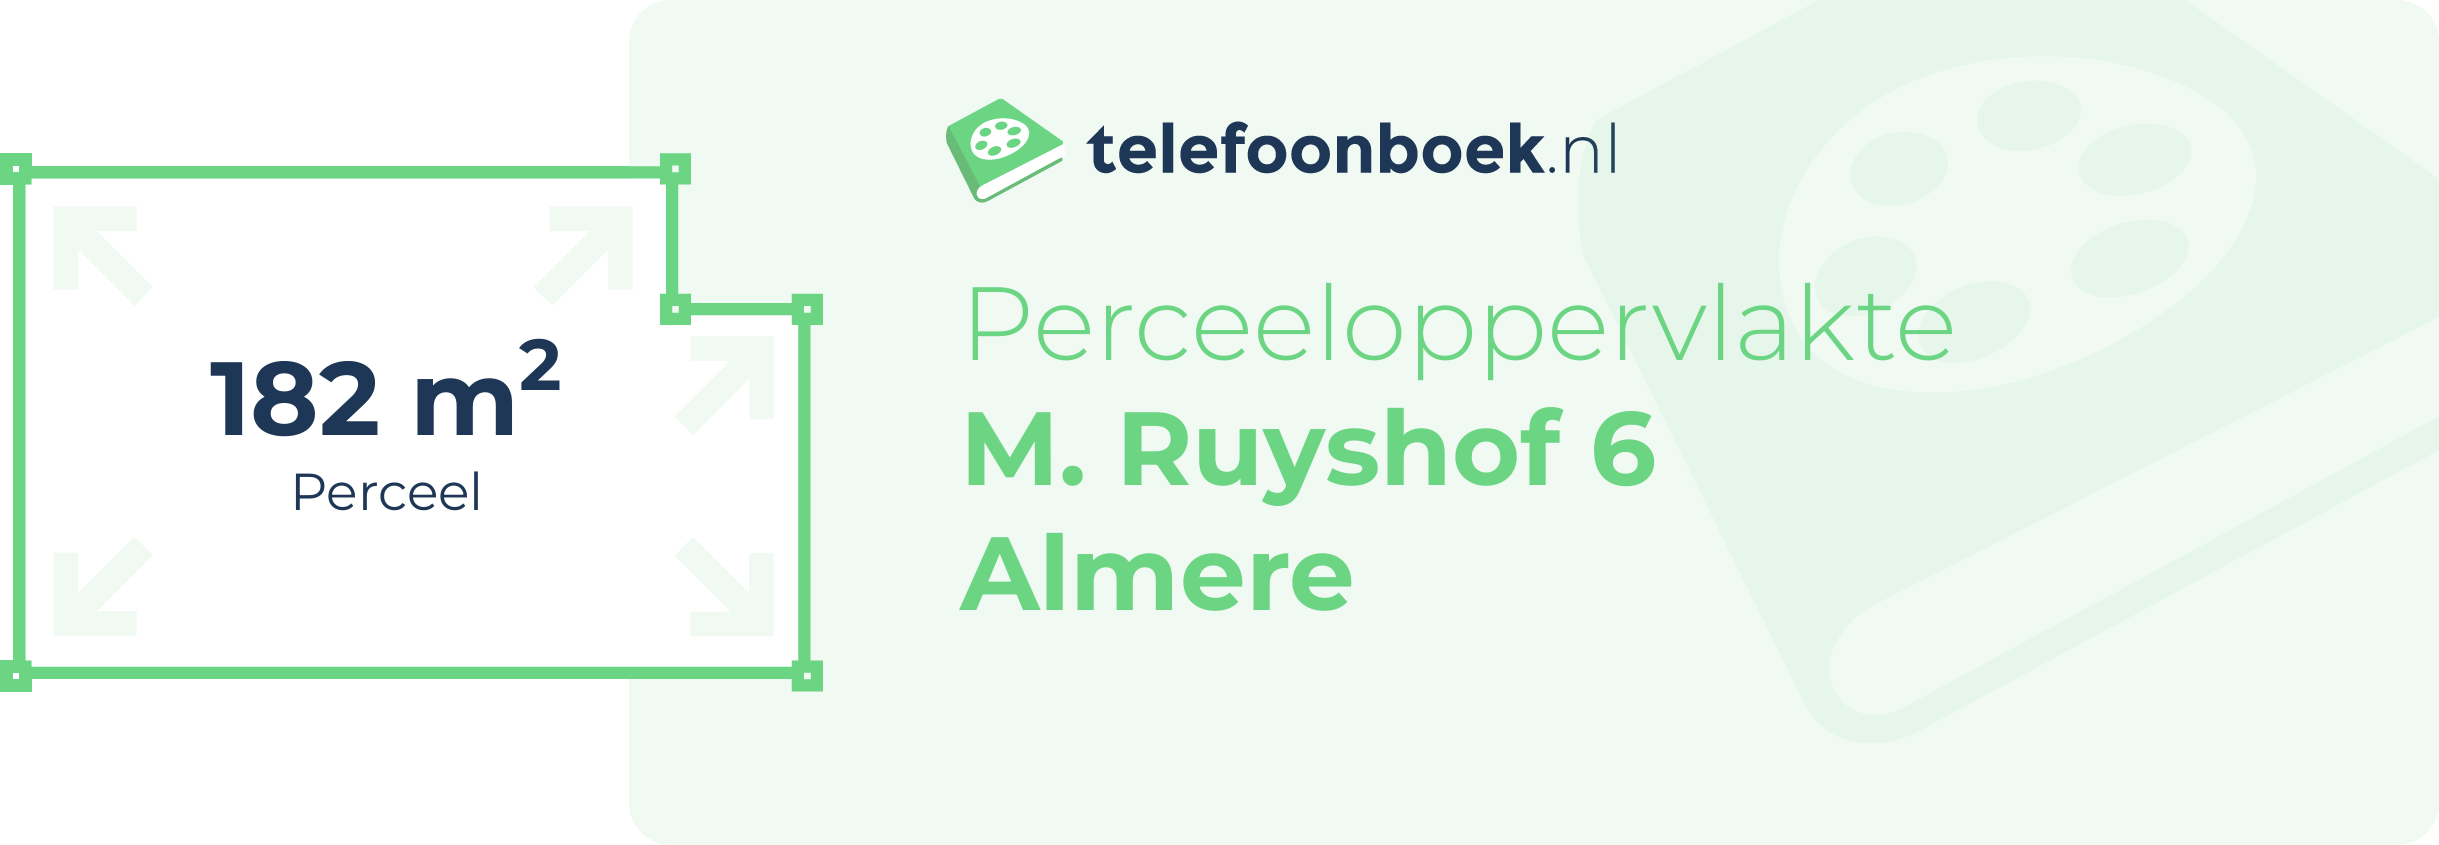 Perceeloppervlakte M. Ruyshof 6 Almere